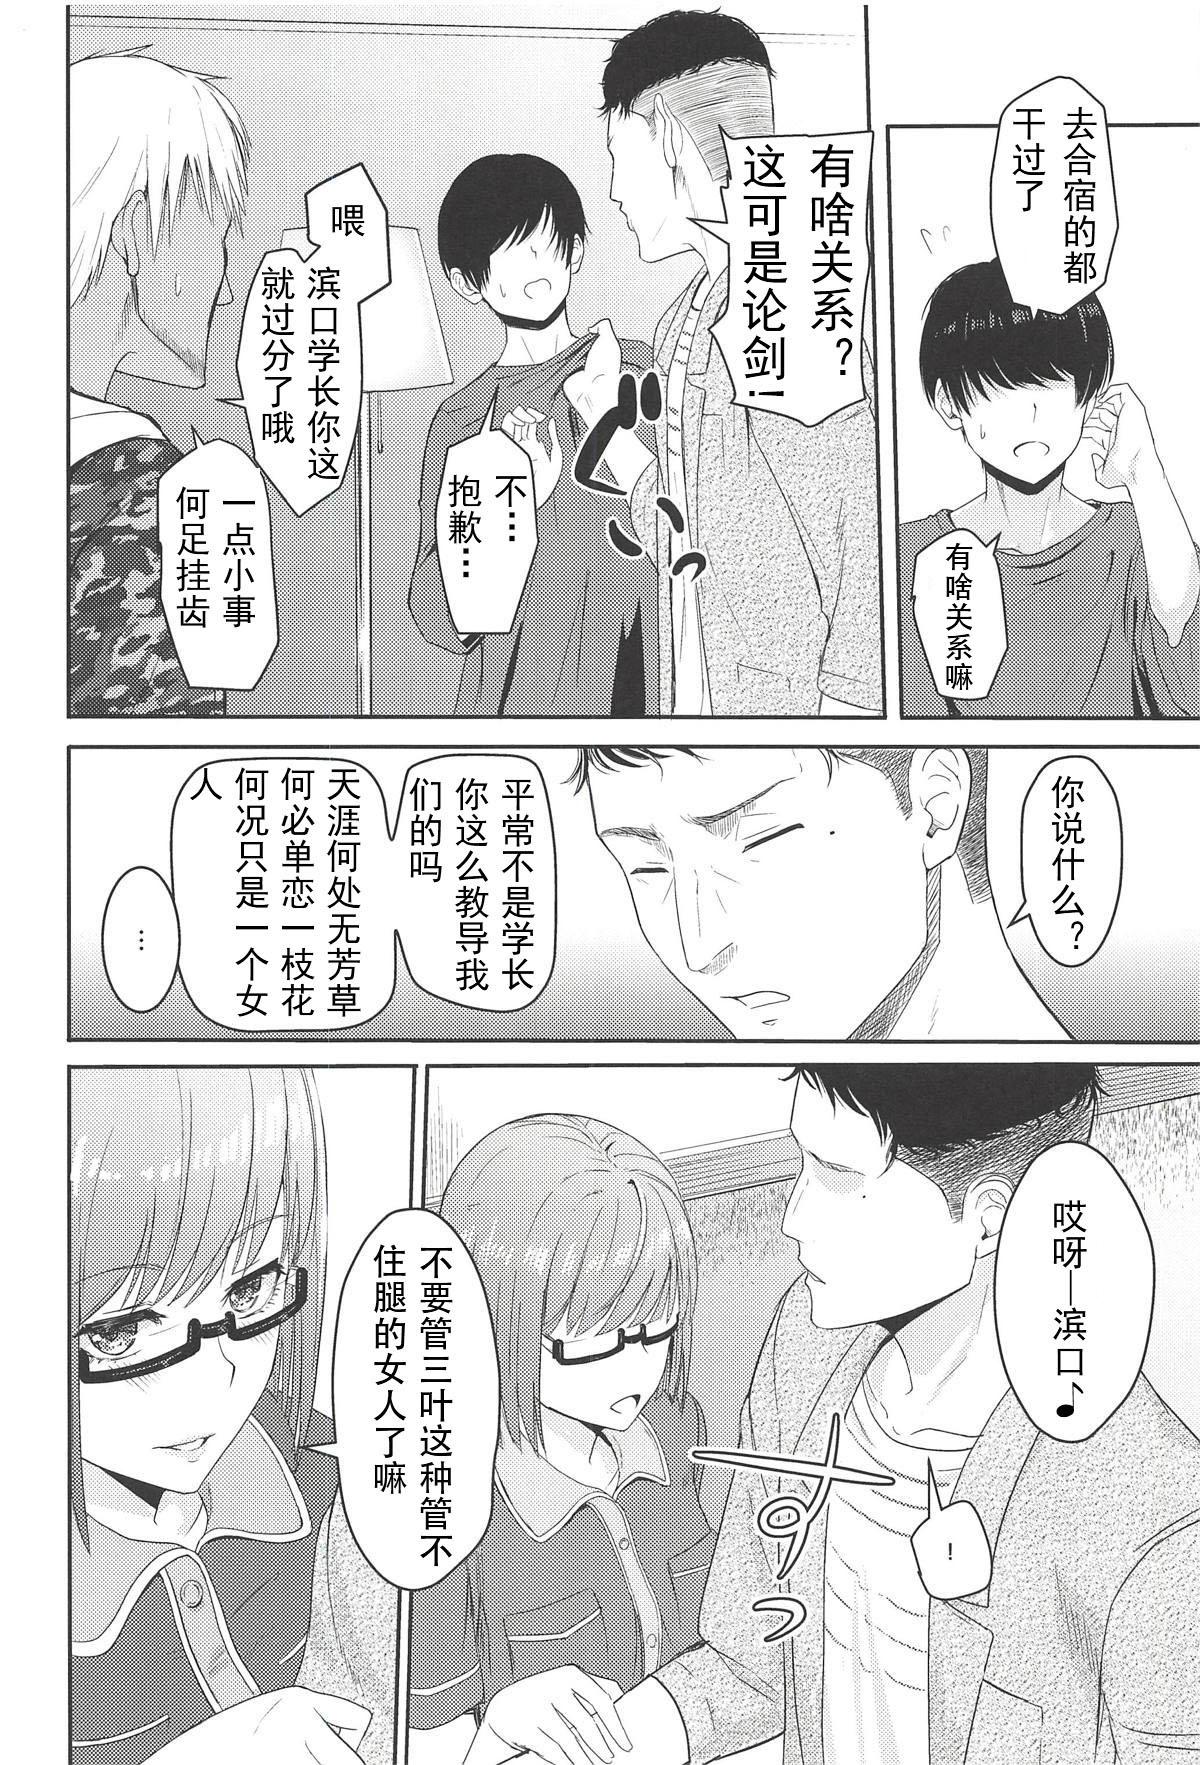 Gape Mitsuha - Kimi no na wa. Sexo Anal - Page 5